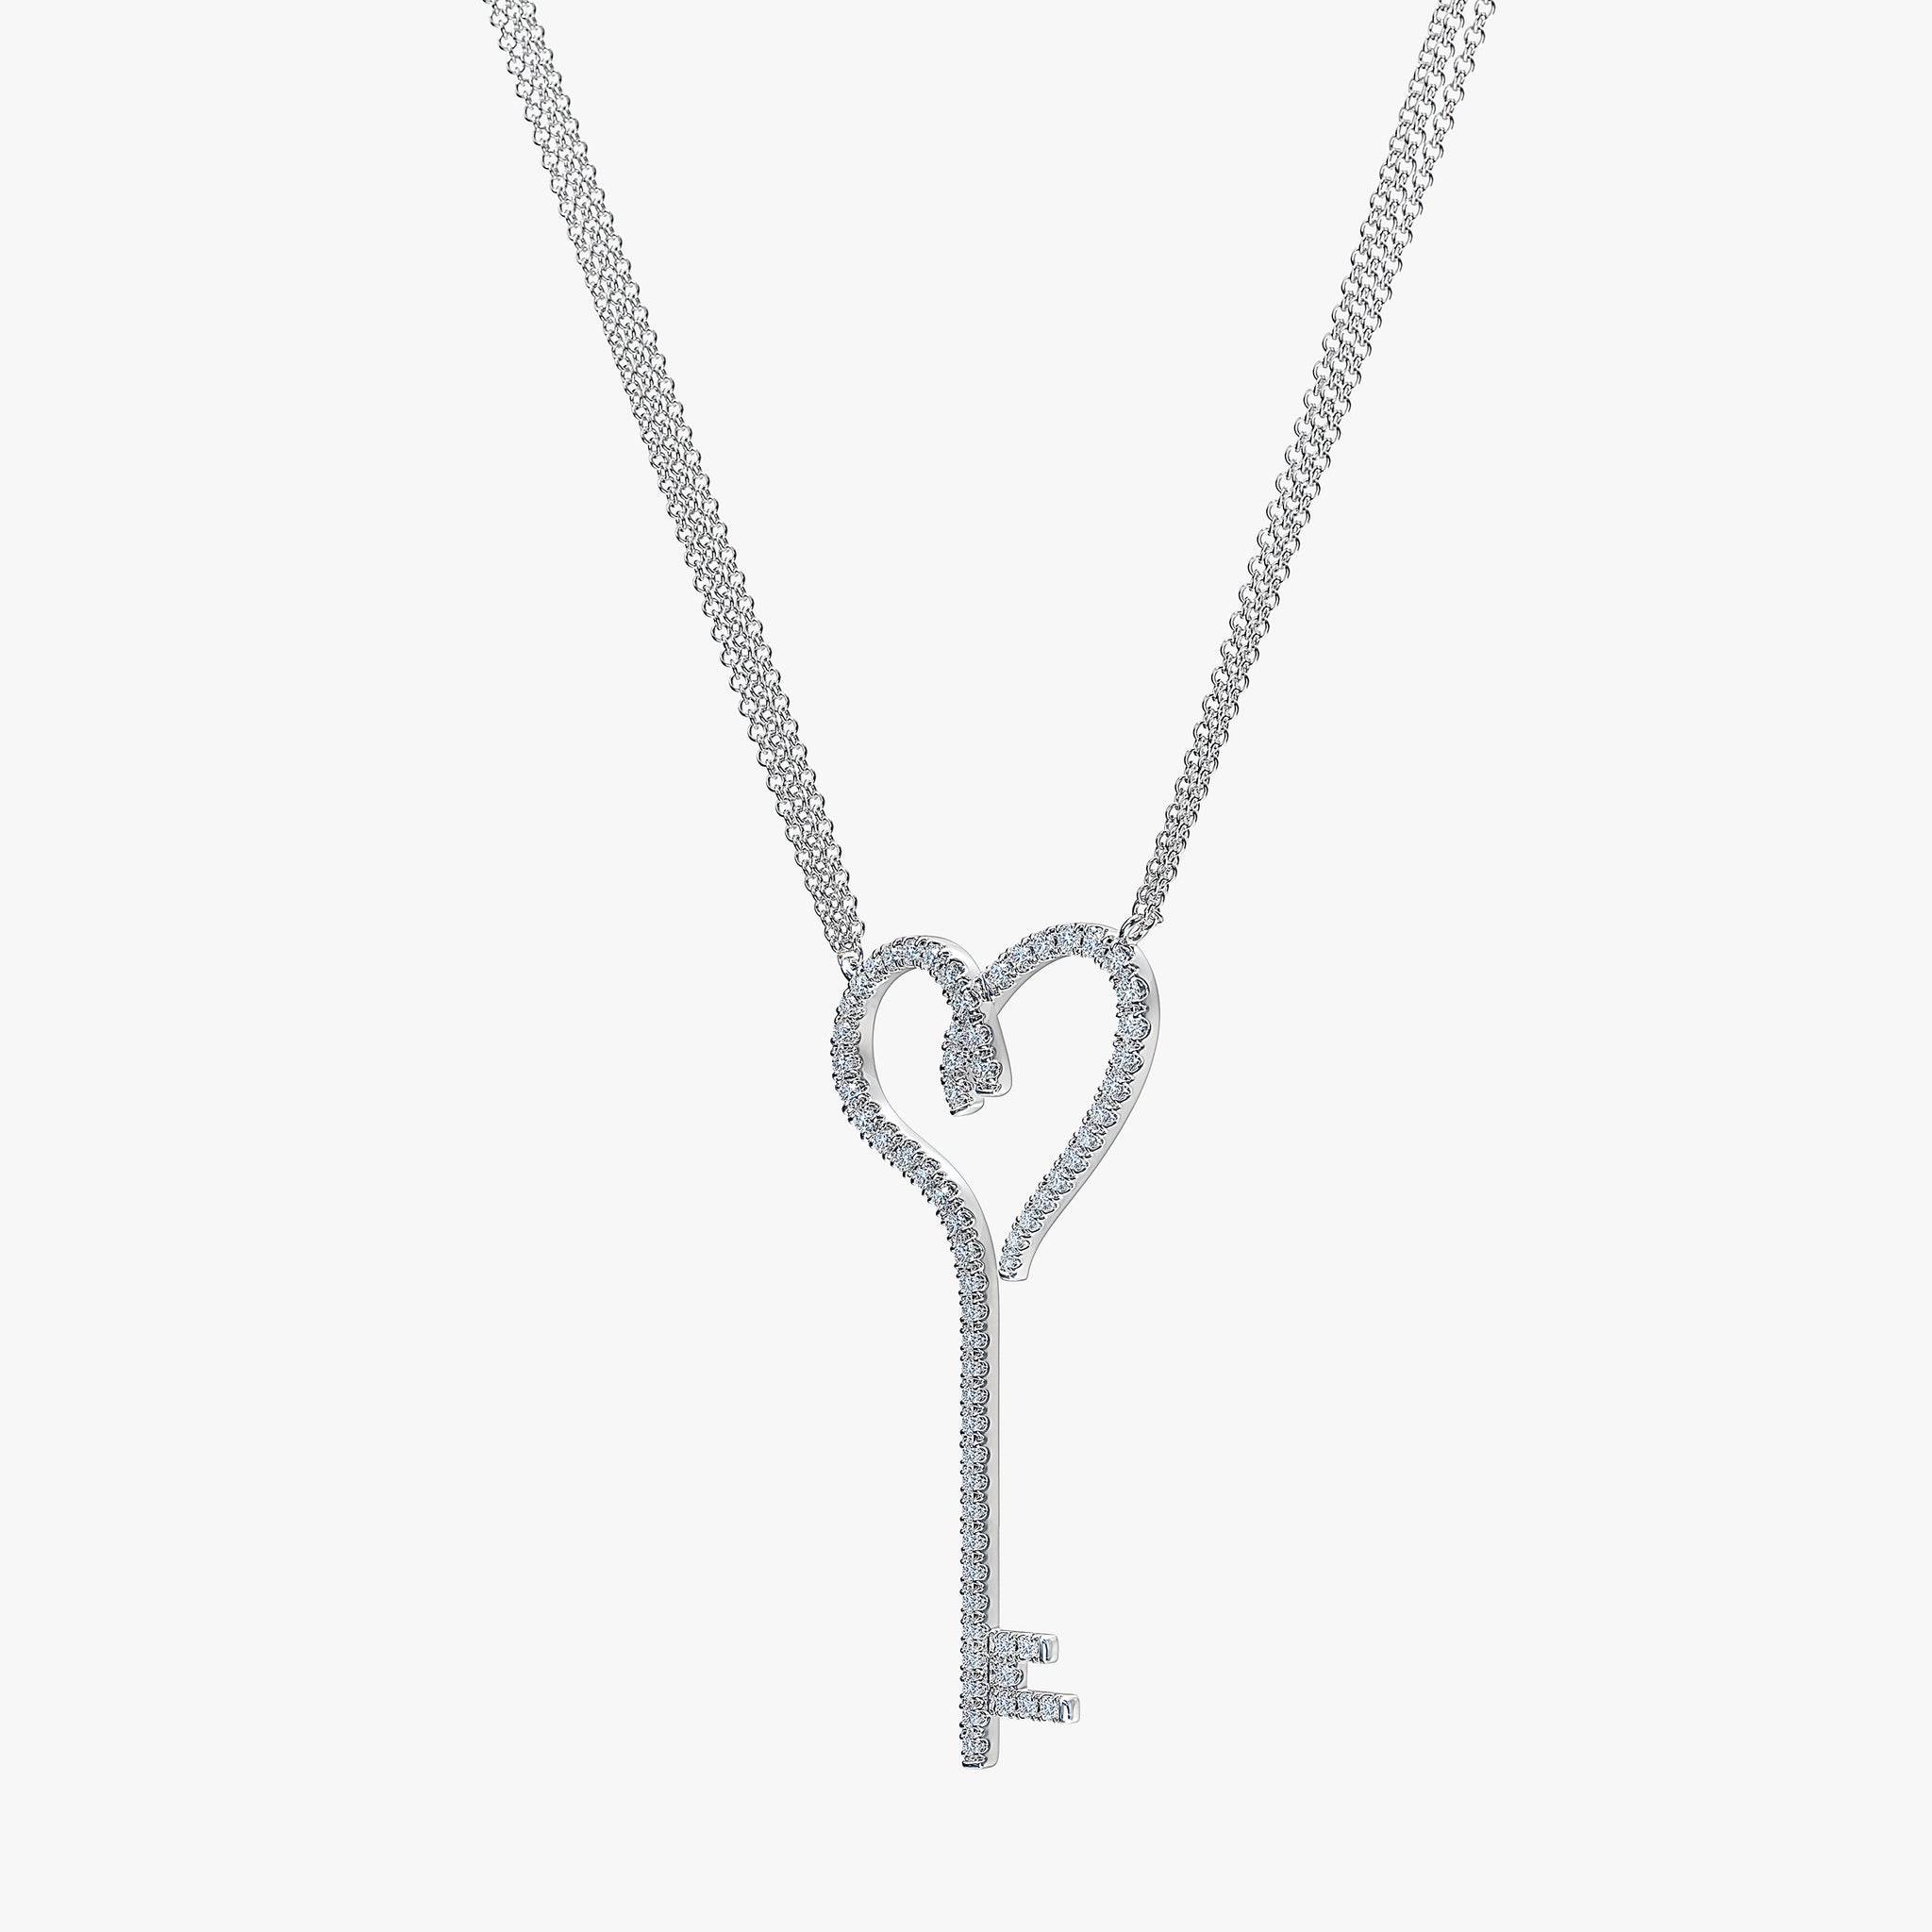 J'EVAR 14KT White Gold Heart Key ALTR Lab Grown Diamond Necklace Lock View